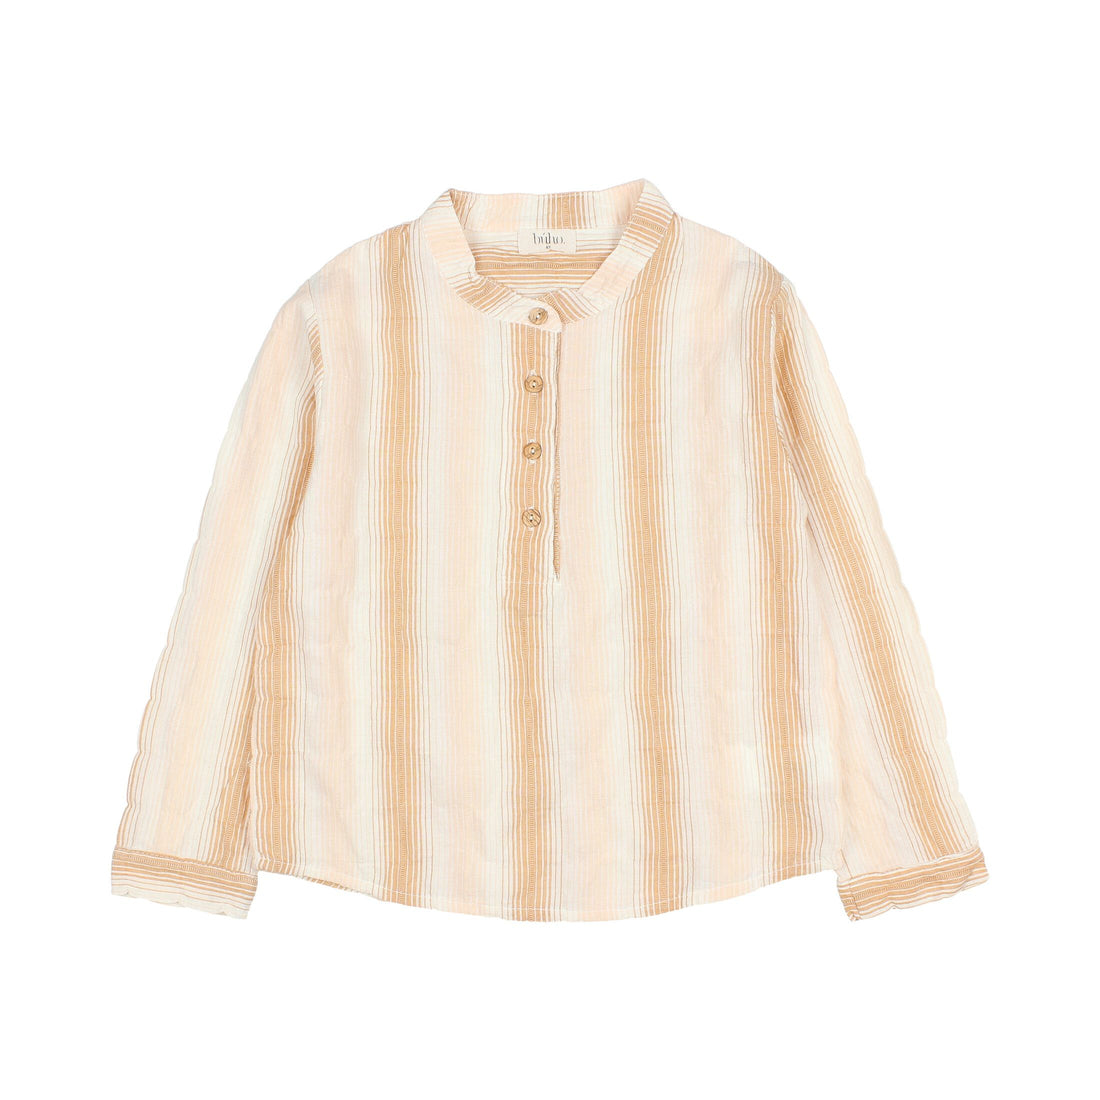 Buho - kids shirt - stripes